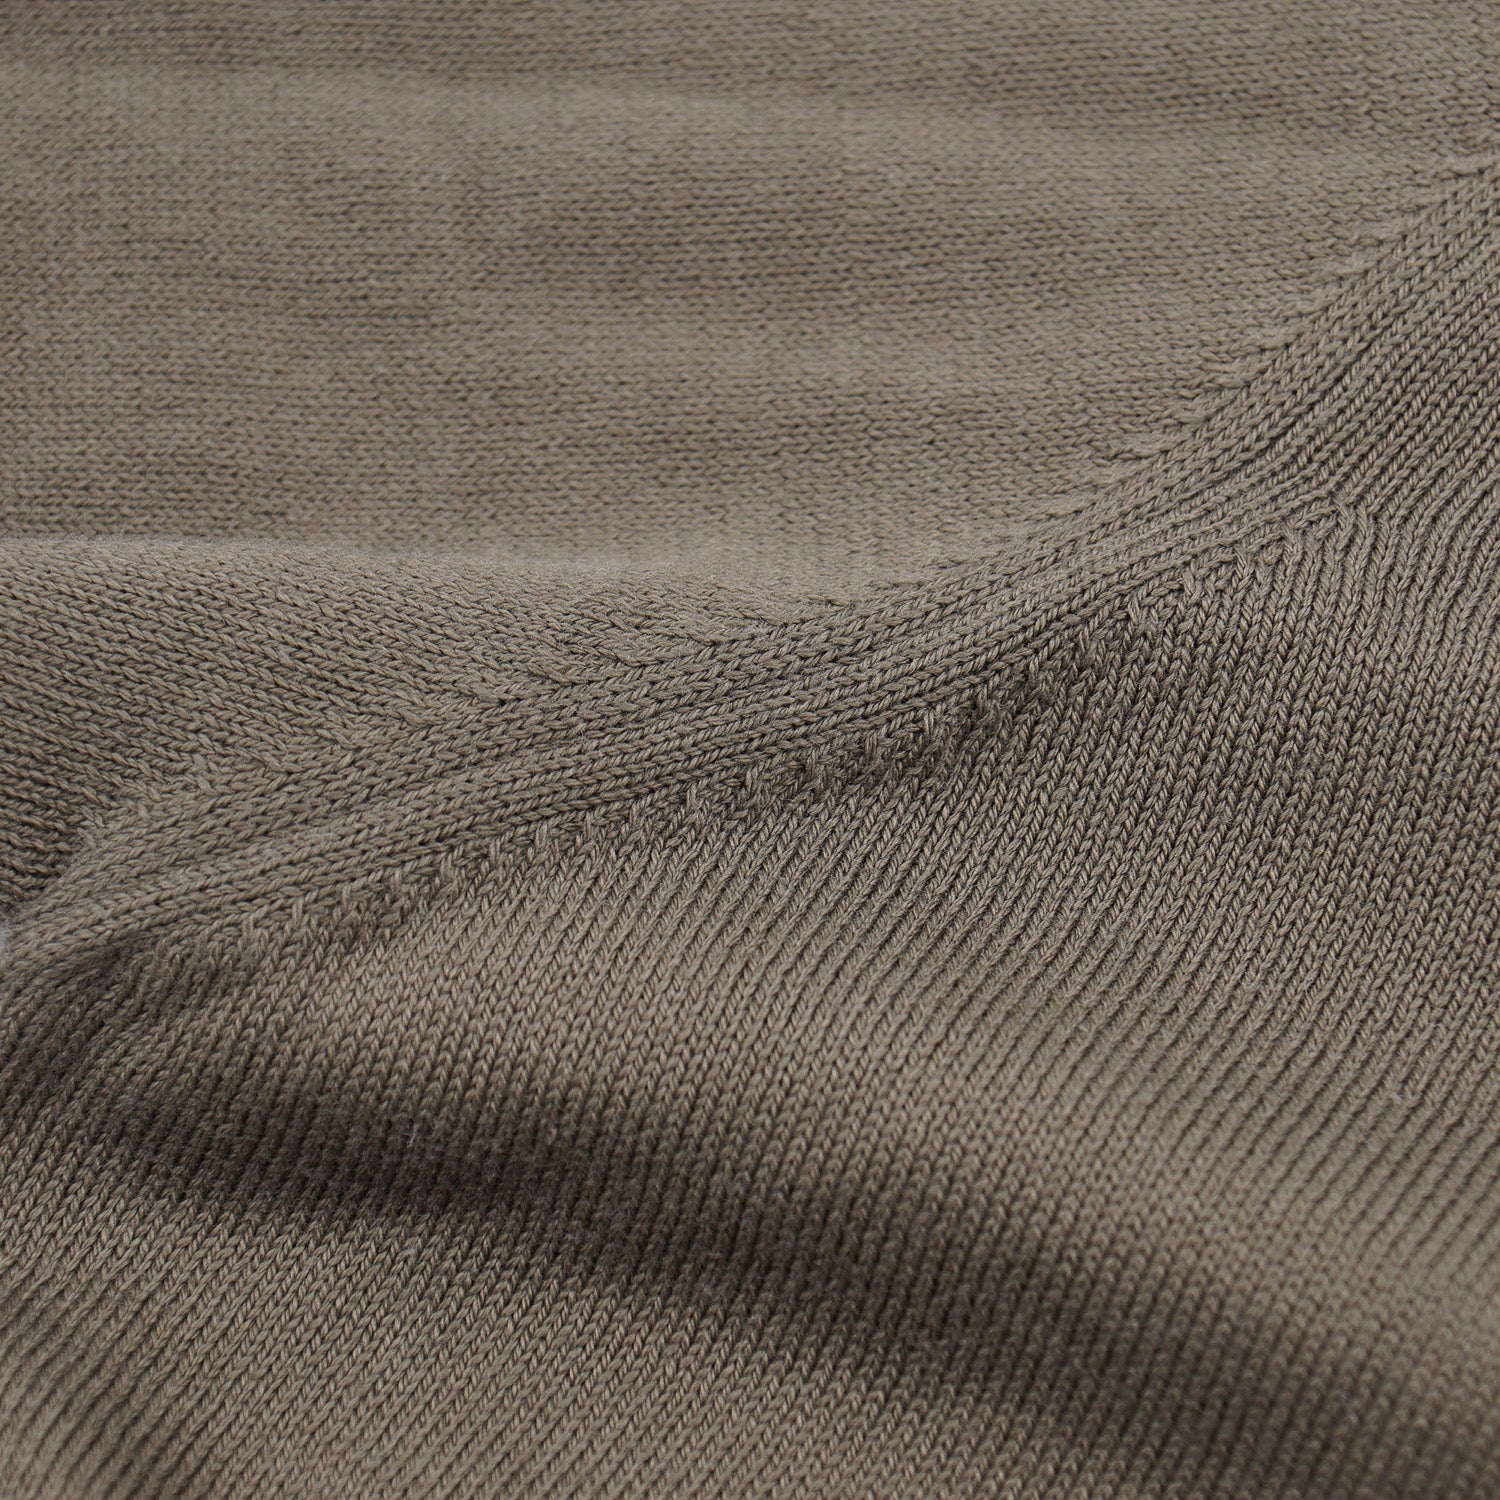 Cruciani Full-Zip Hooded Sweater - Top Shelf Apparel